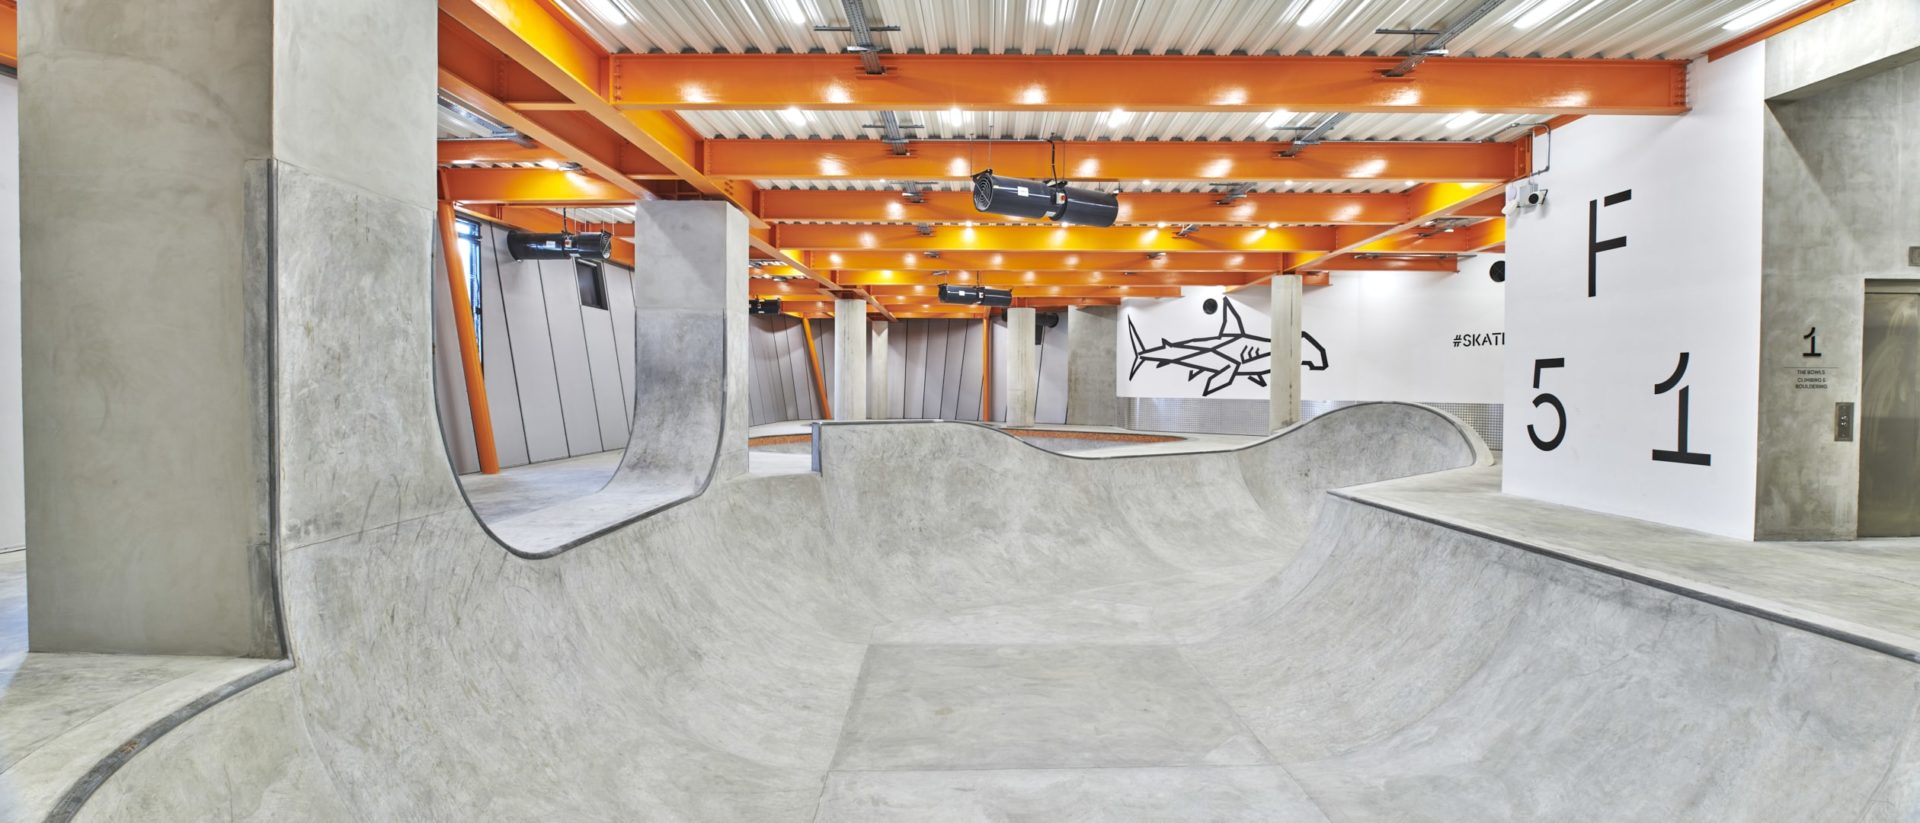 A multi-storey skatepark